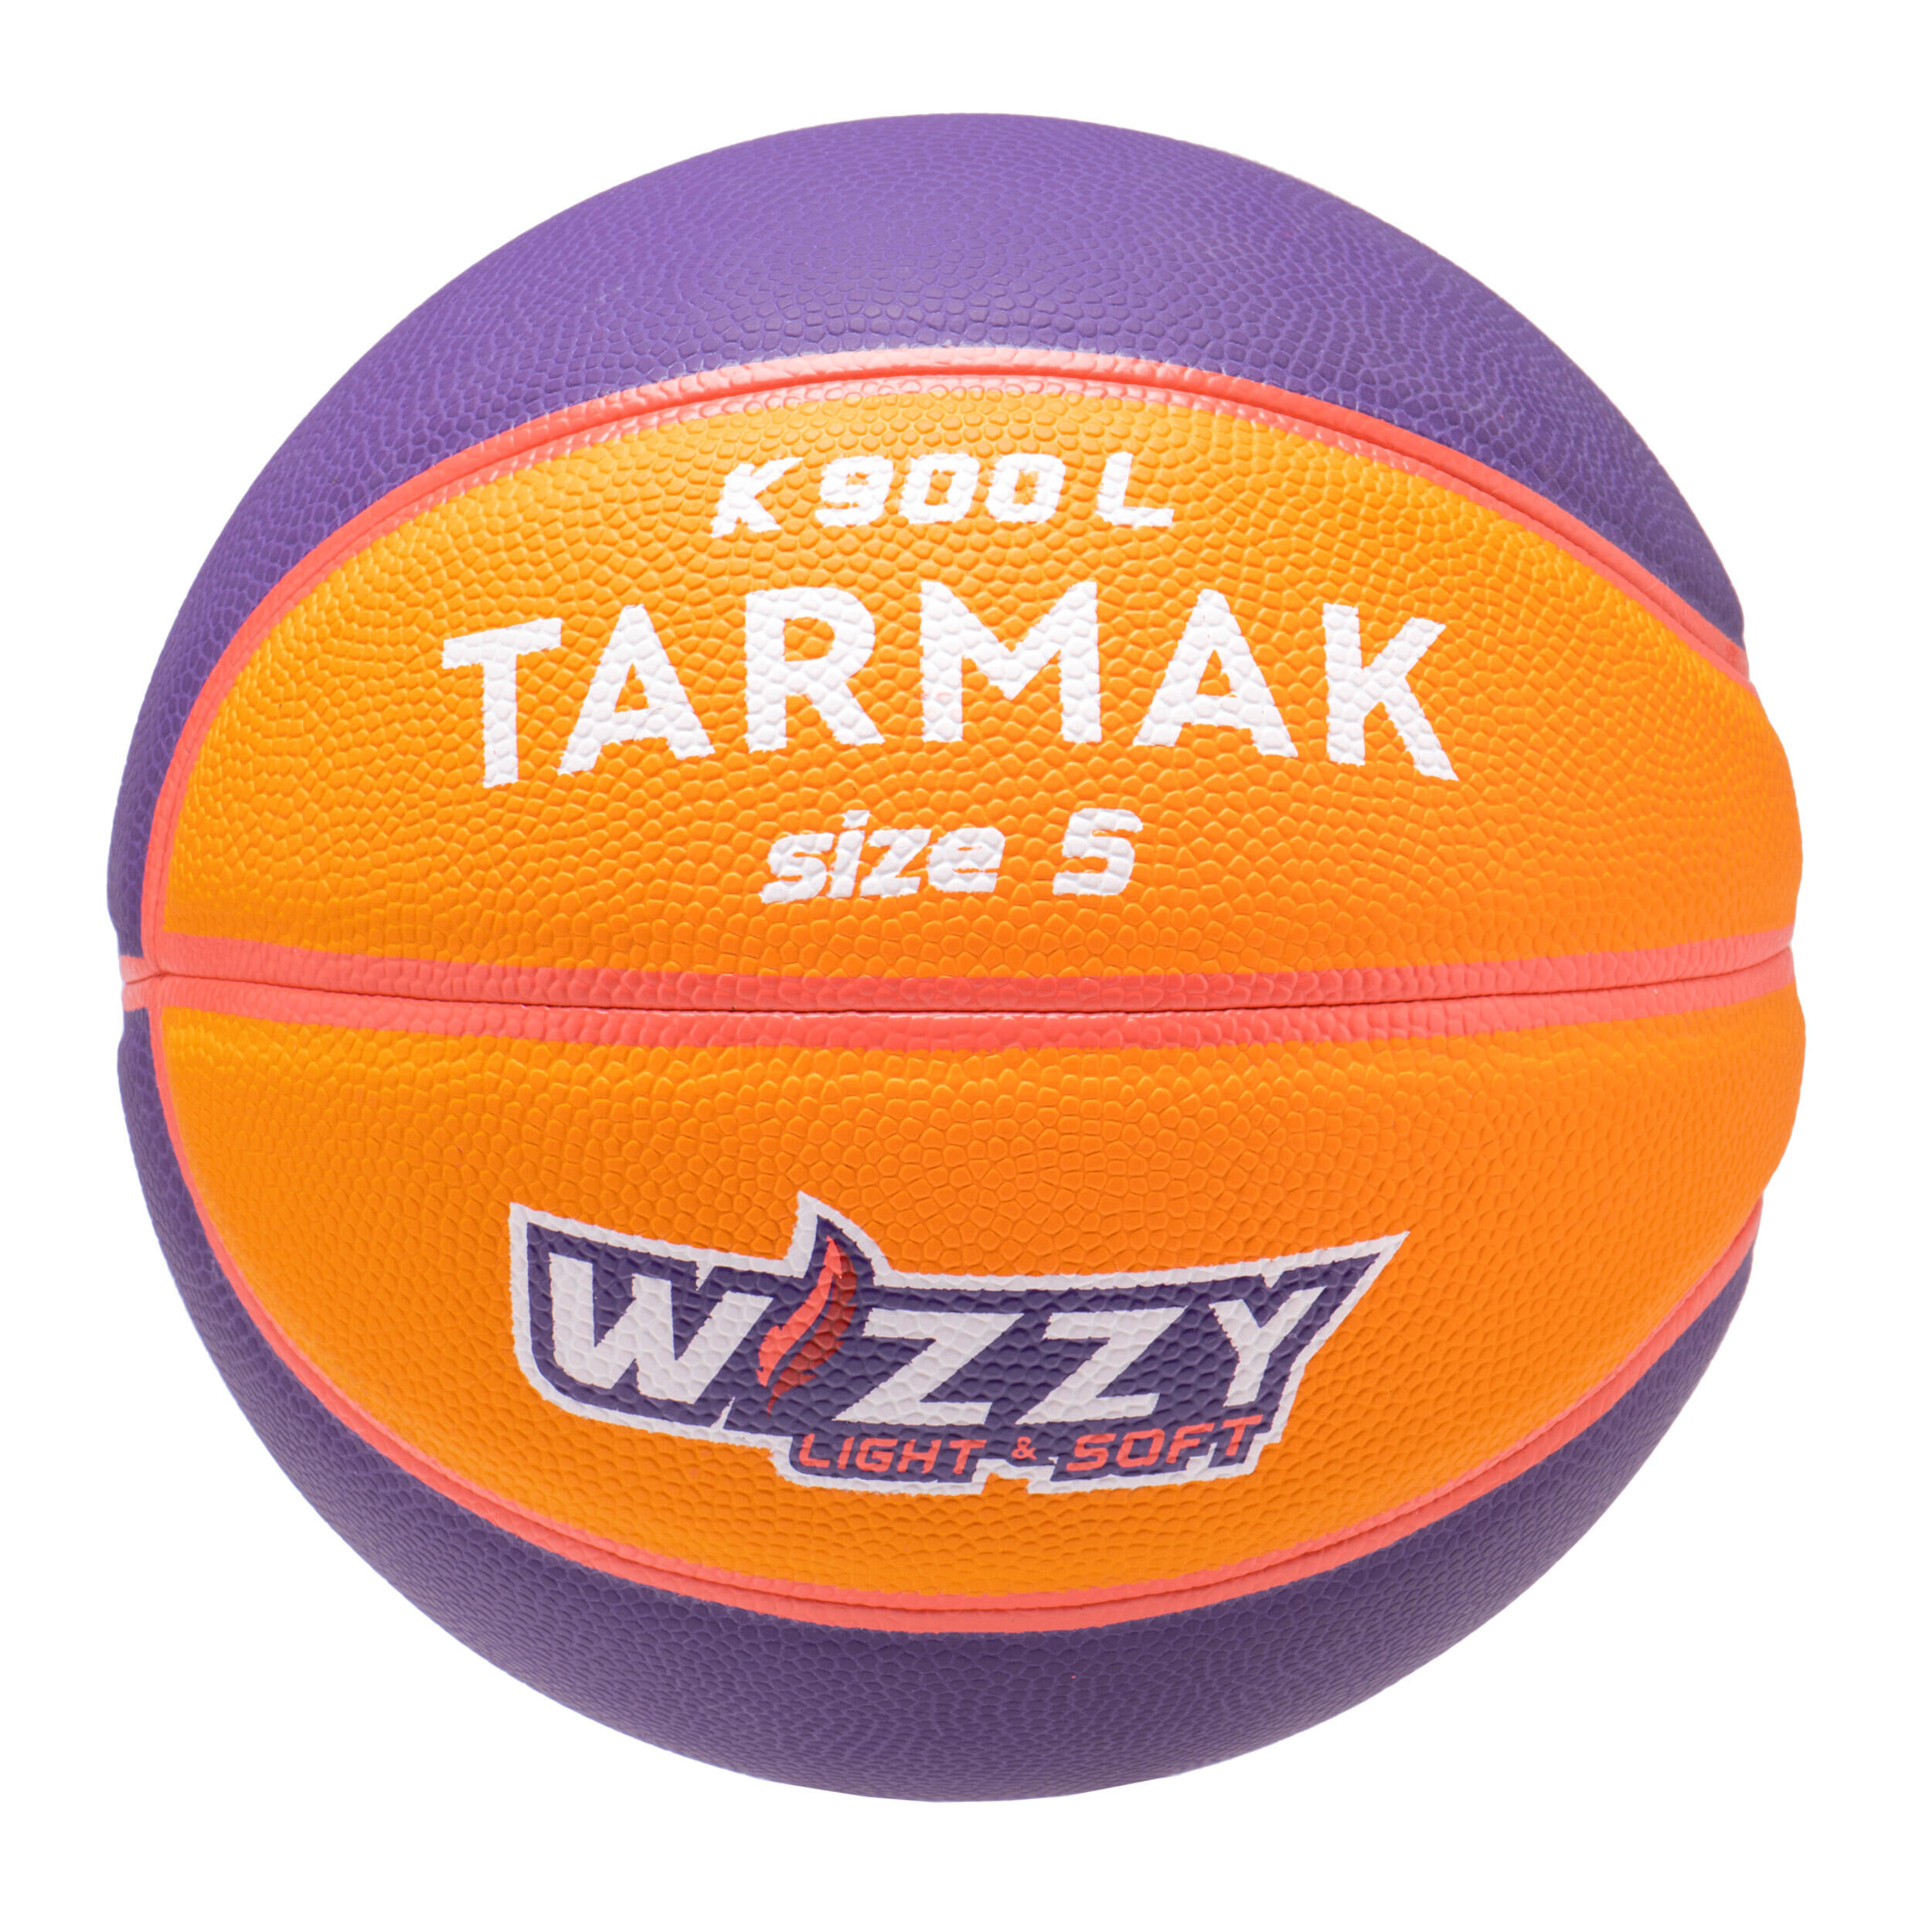 TARMAK K900 Wizzy Ball - Orange/Purple